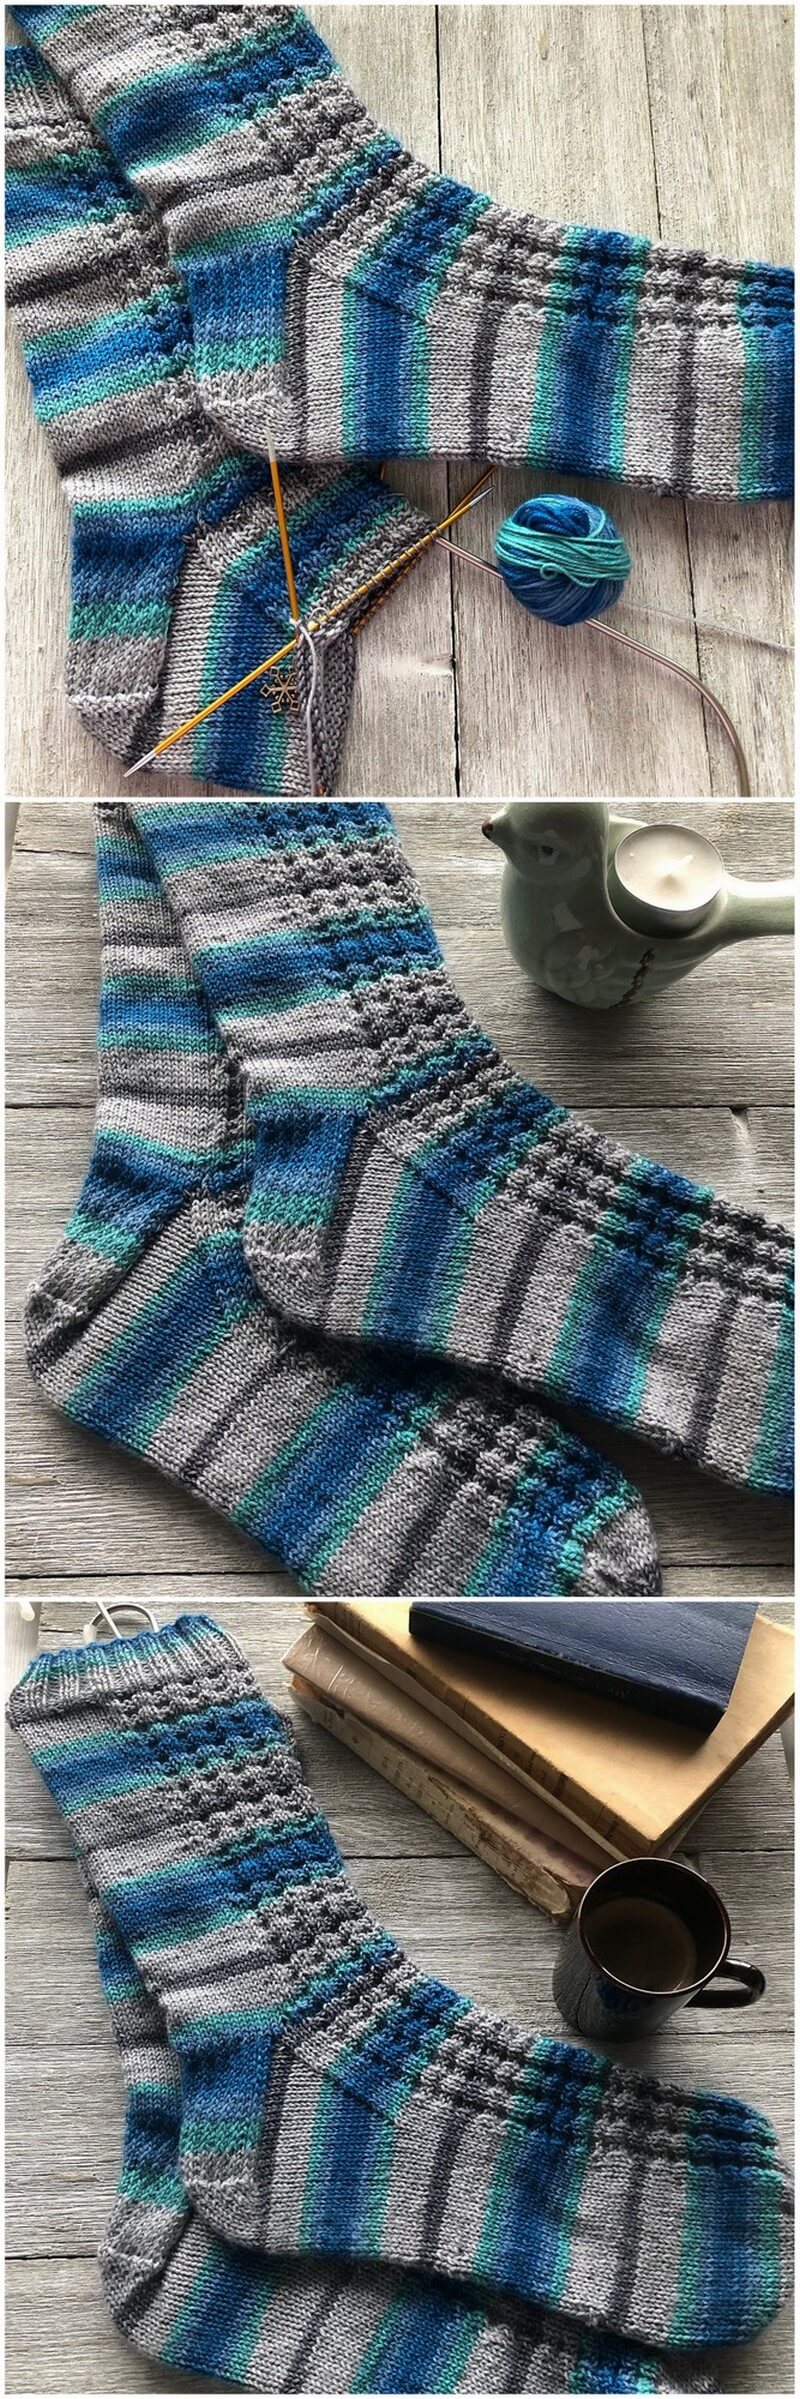 Crochet Slipper Pattern (31)